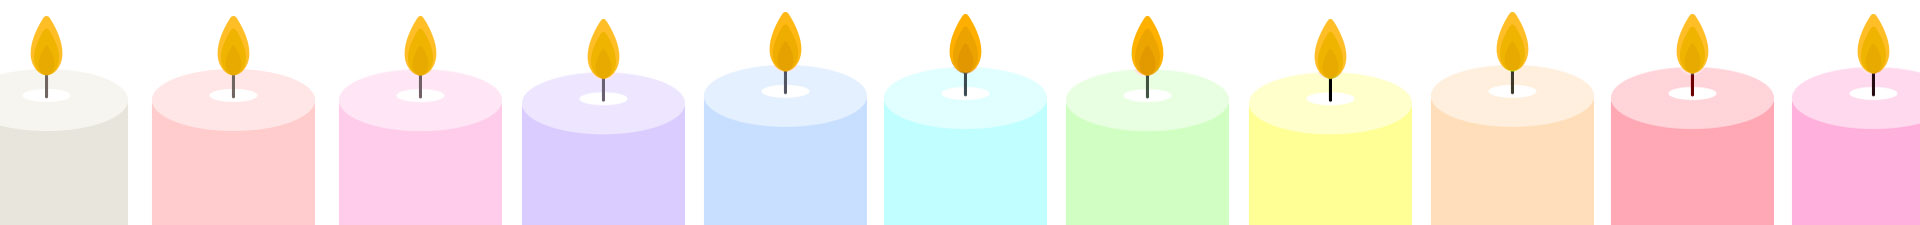 ingrosso candele semplici